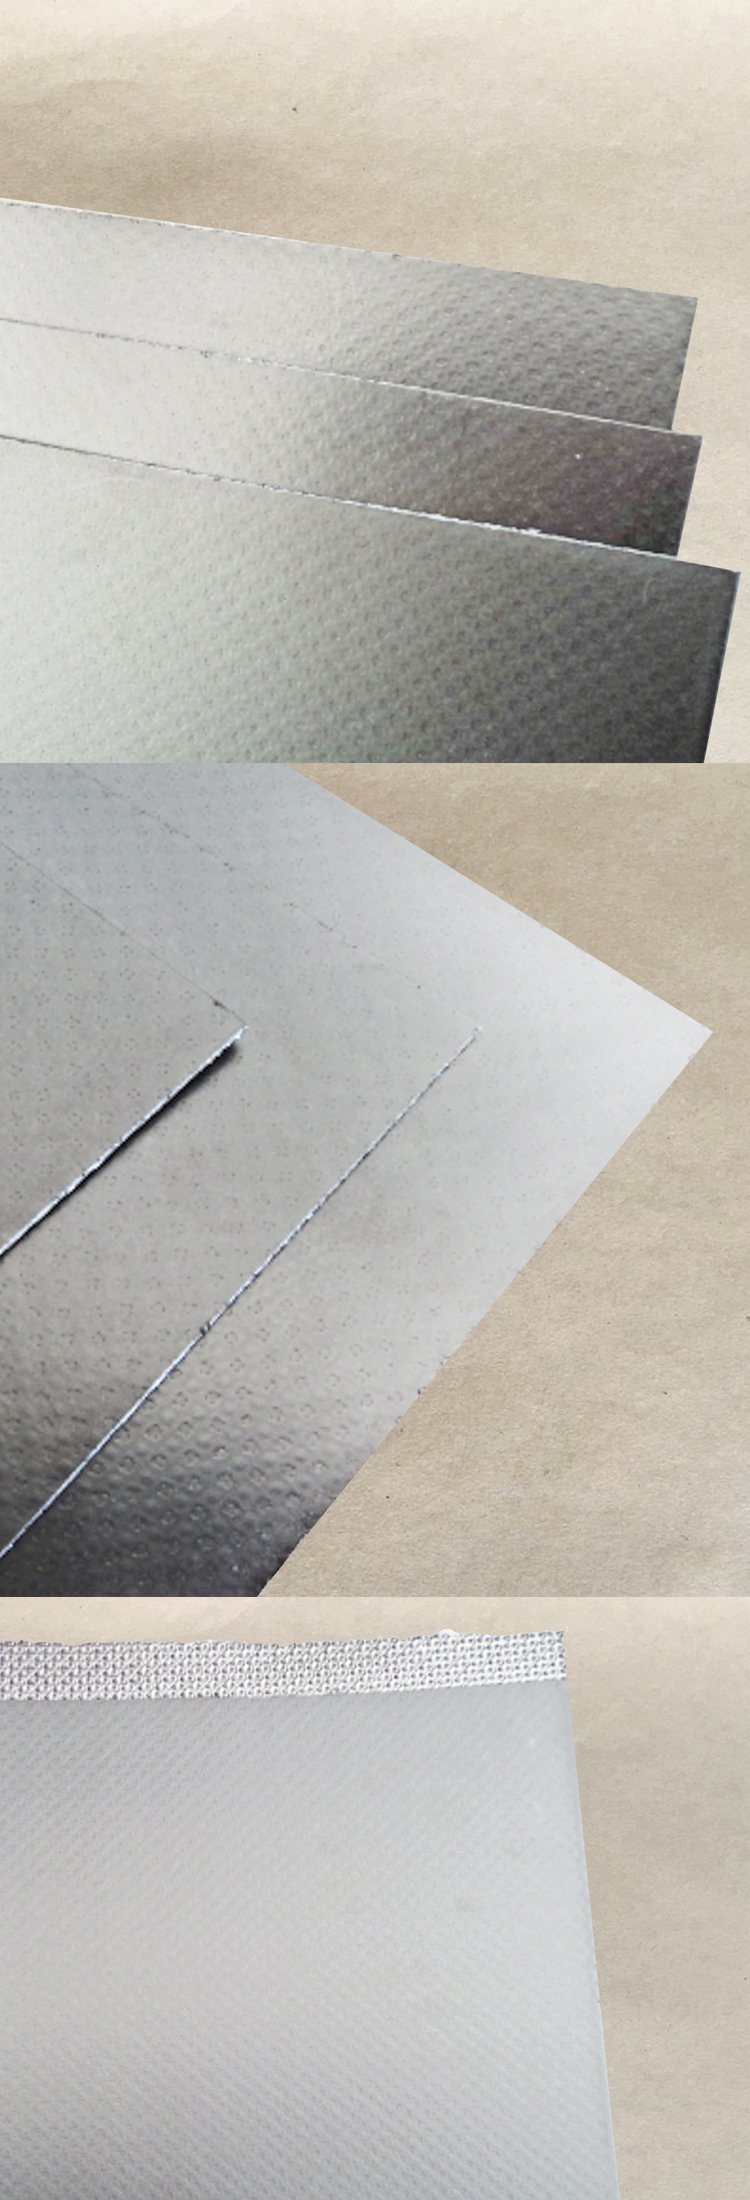 Flexible Graphite Sheet Reinforced with Metallic Foil